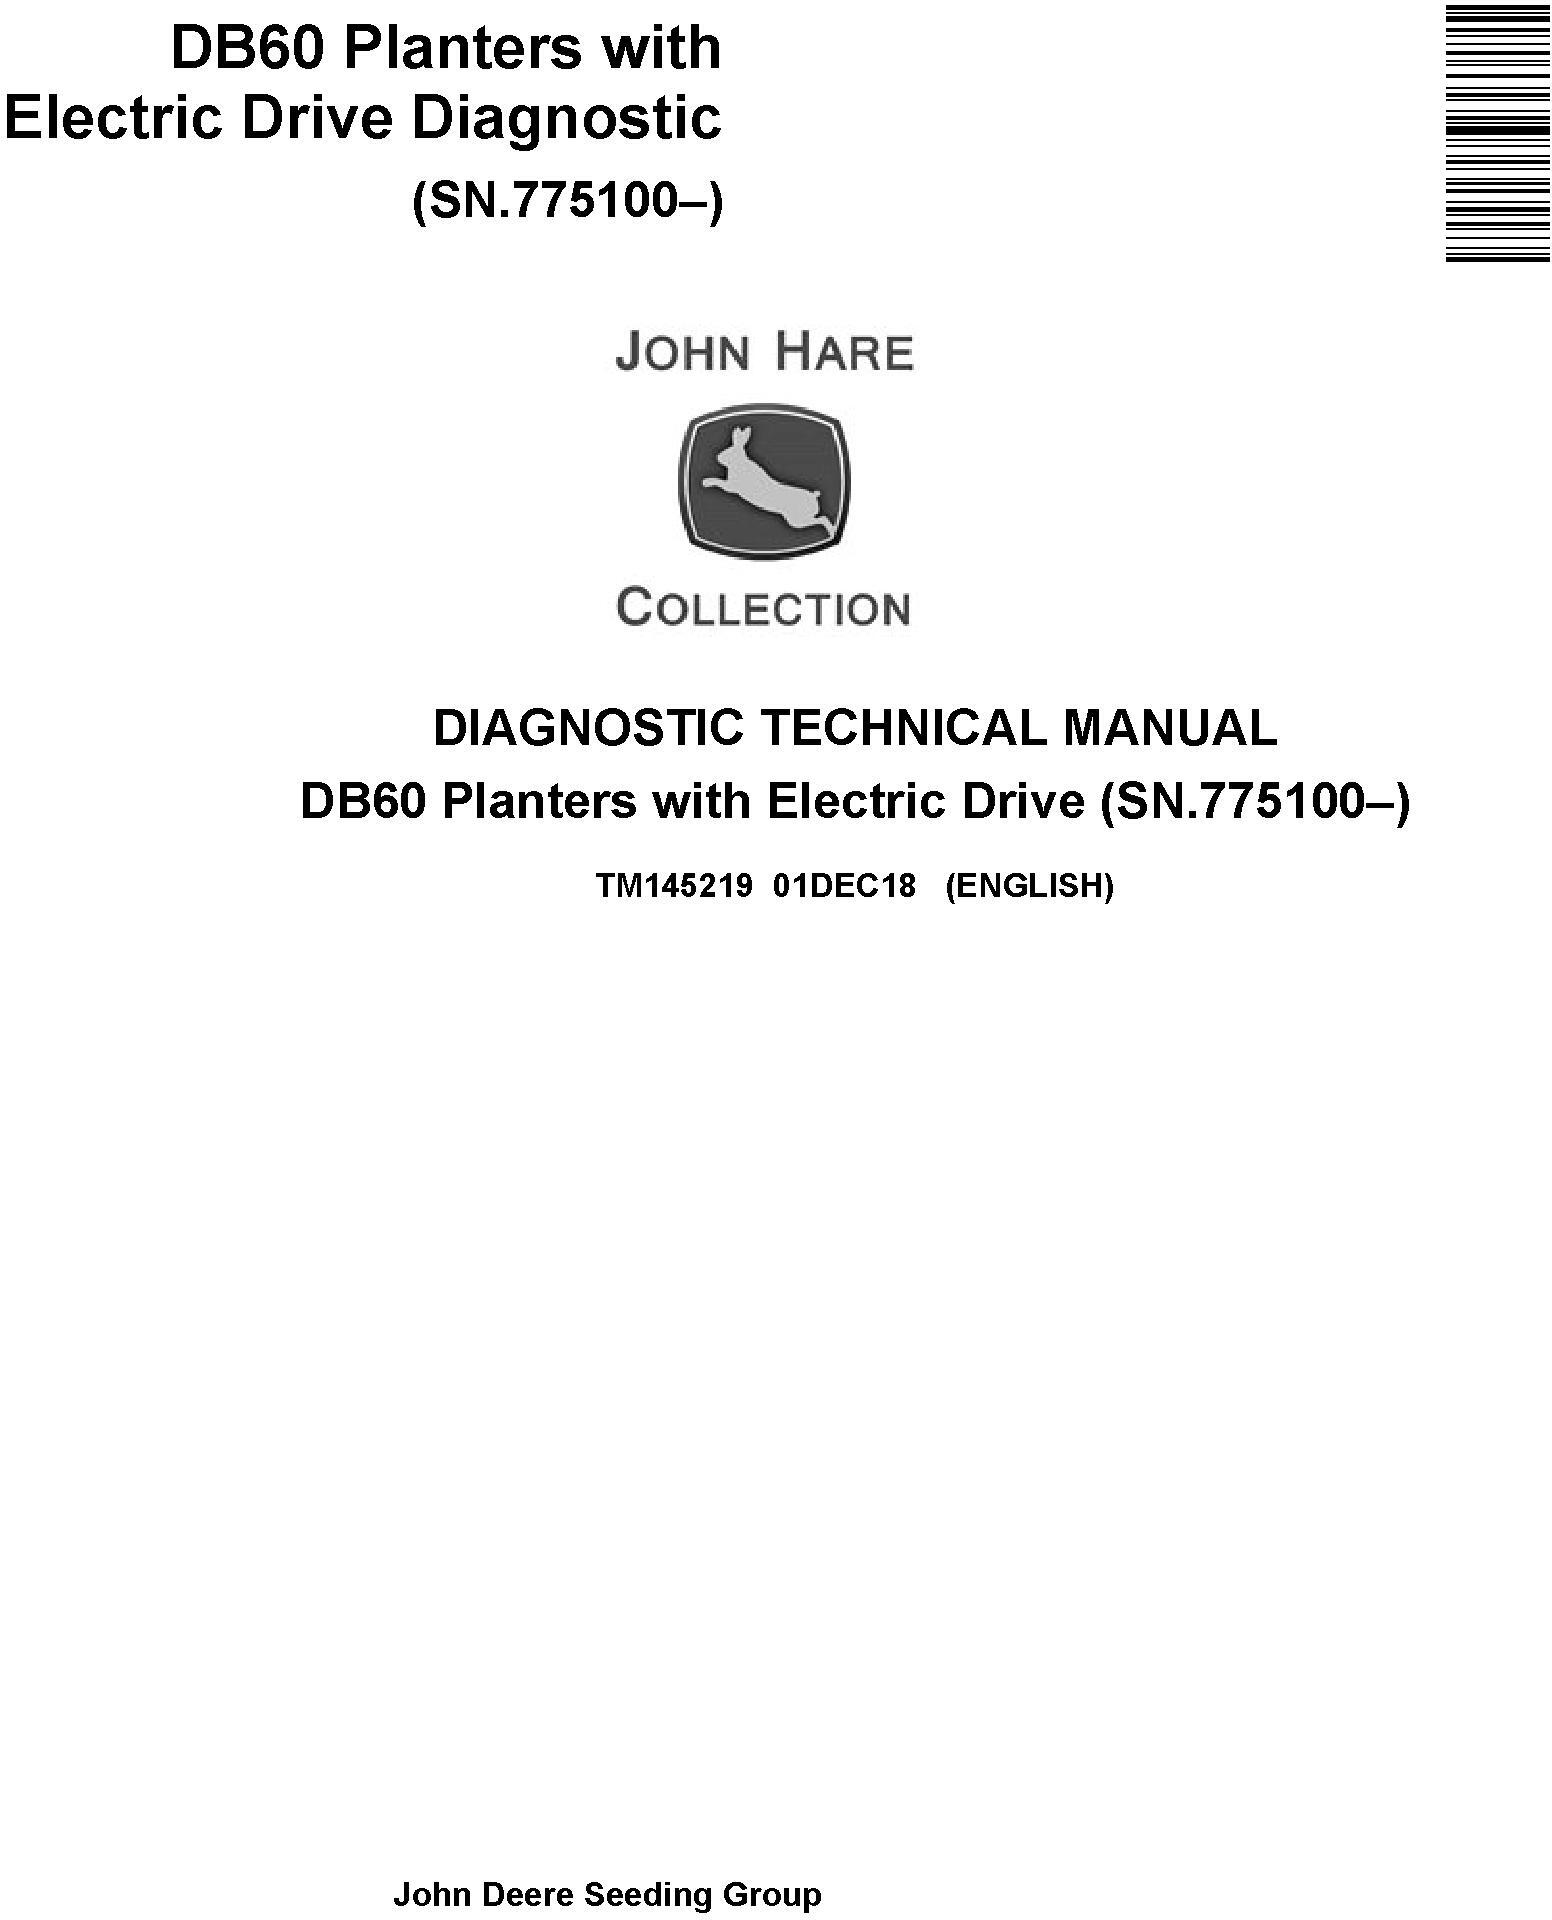 John Deere DB60 Planter Diagnostic Technical Manual TM145219